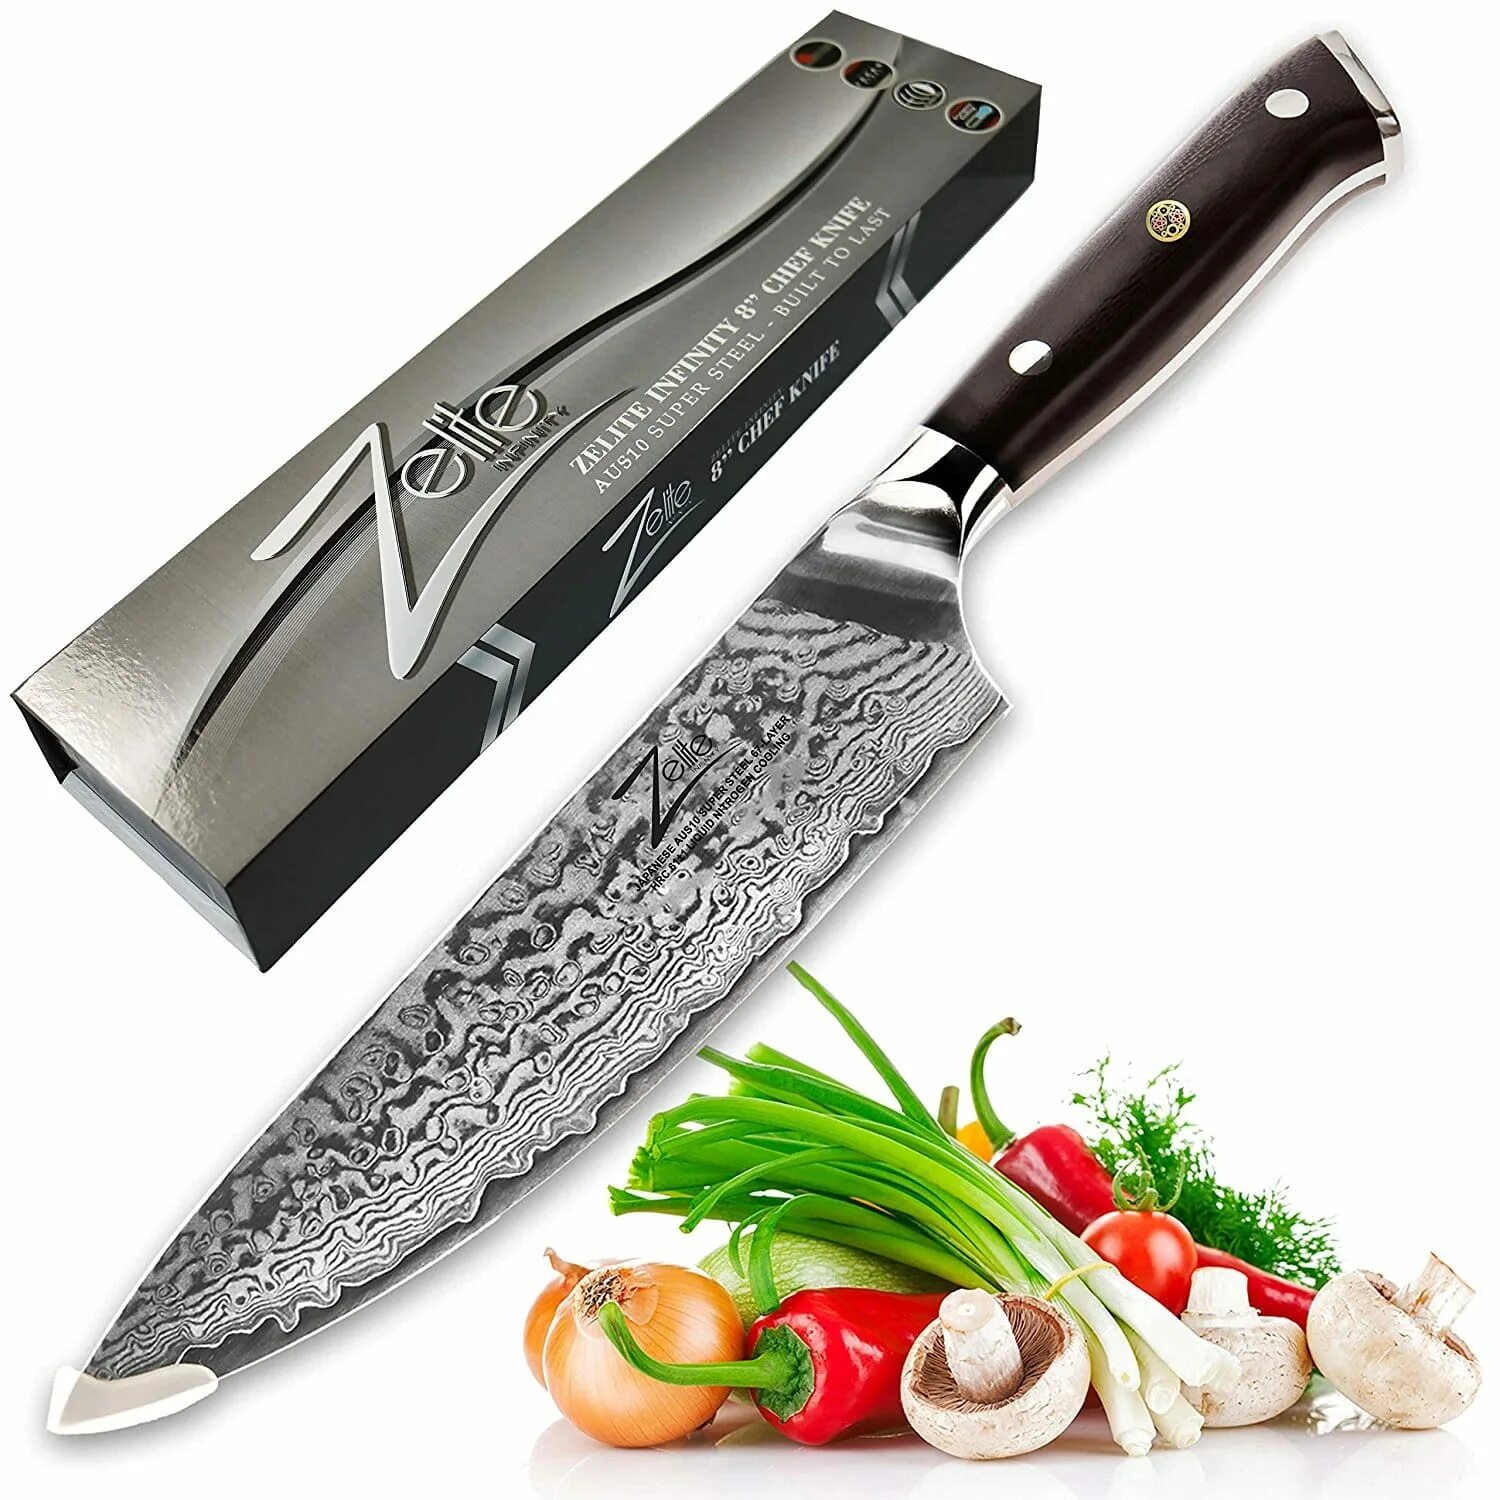 Повар нож купить. Нож Chef Knife. Кузнец ножи шеф нож vg10 Elmax. Нож шеф Kiyomi Japan. Нож кухонный Chef Knife.